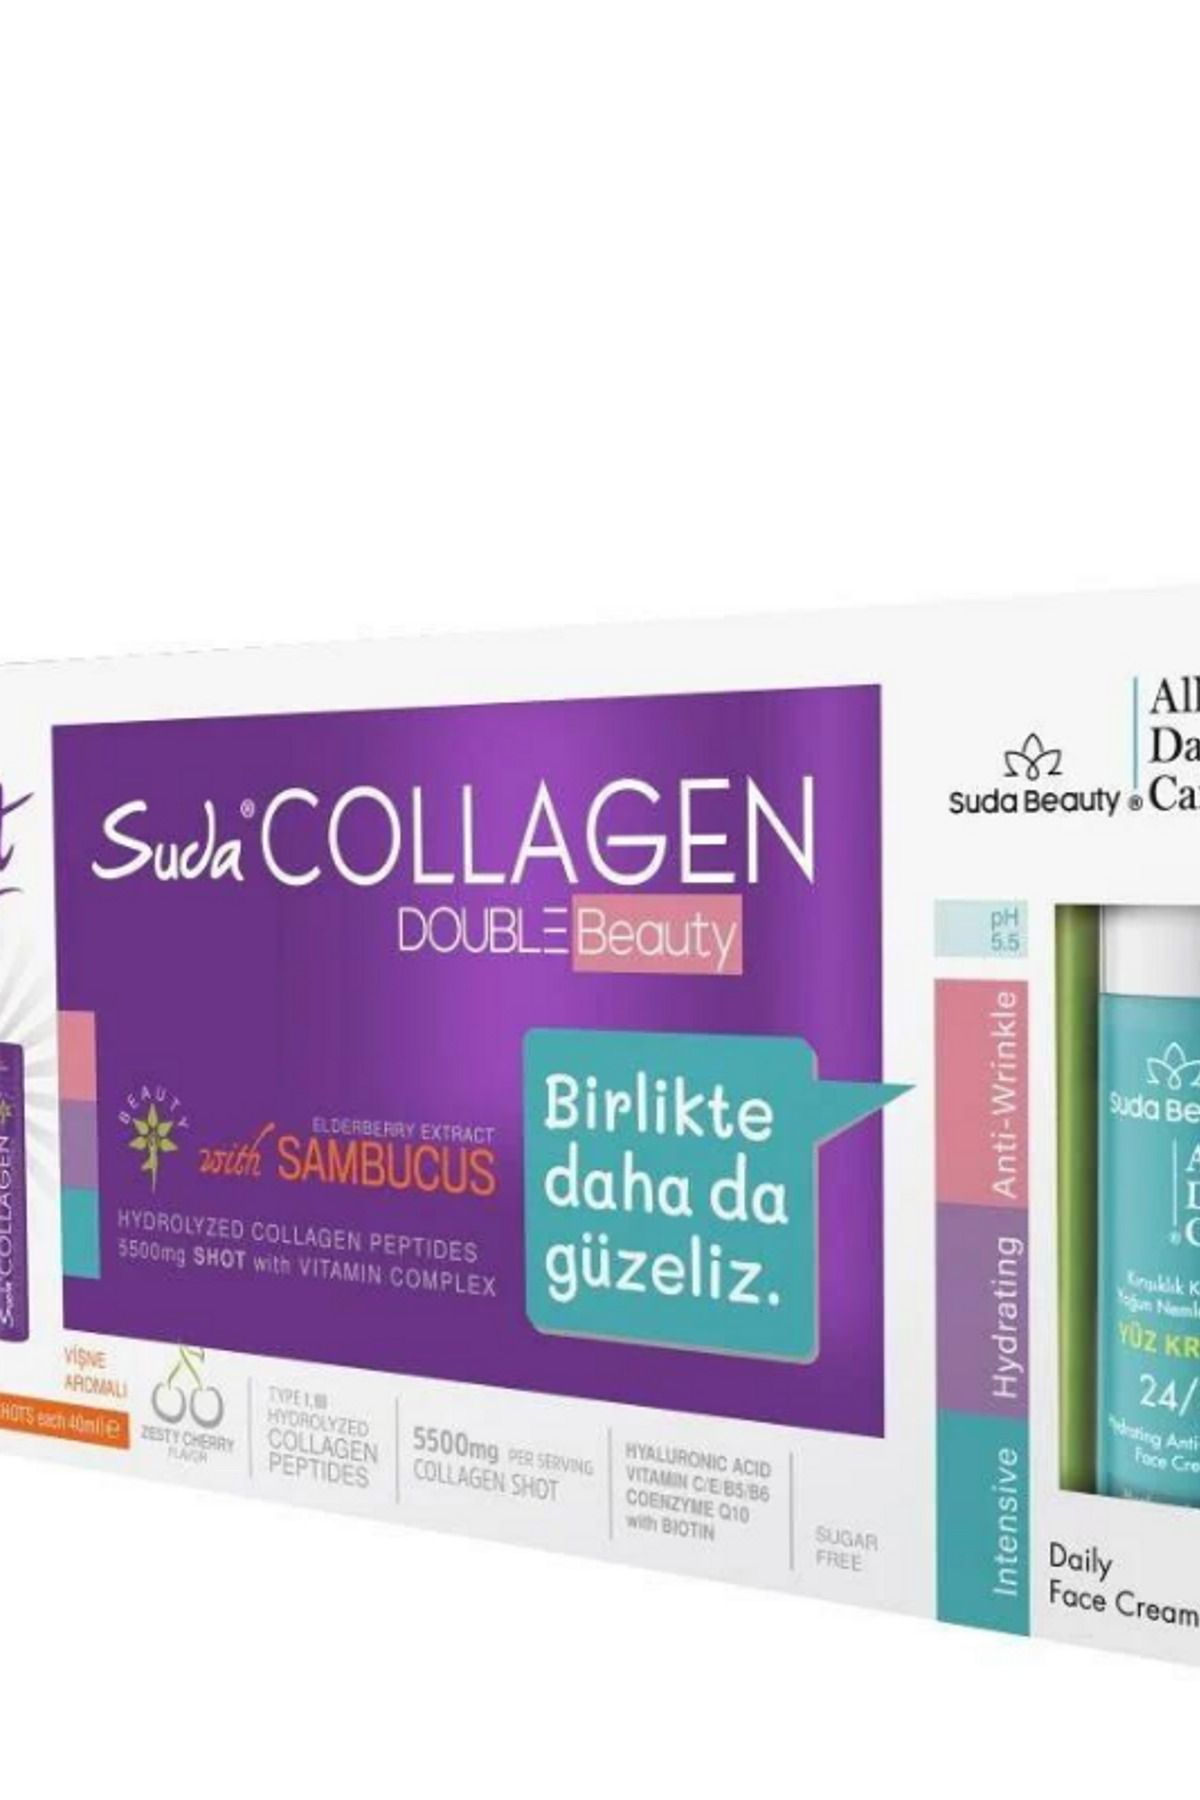 Suda Collagen Double Beauty (30 Shot Vişne Kolajen & Suda Beauty All Day Care Yüz Kremi 50ml)